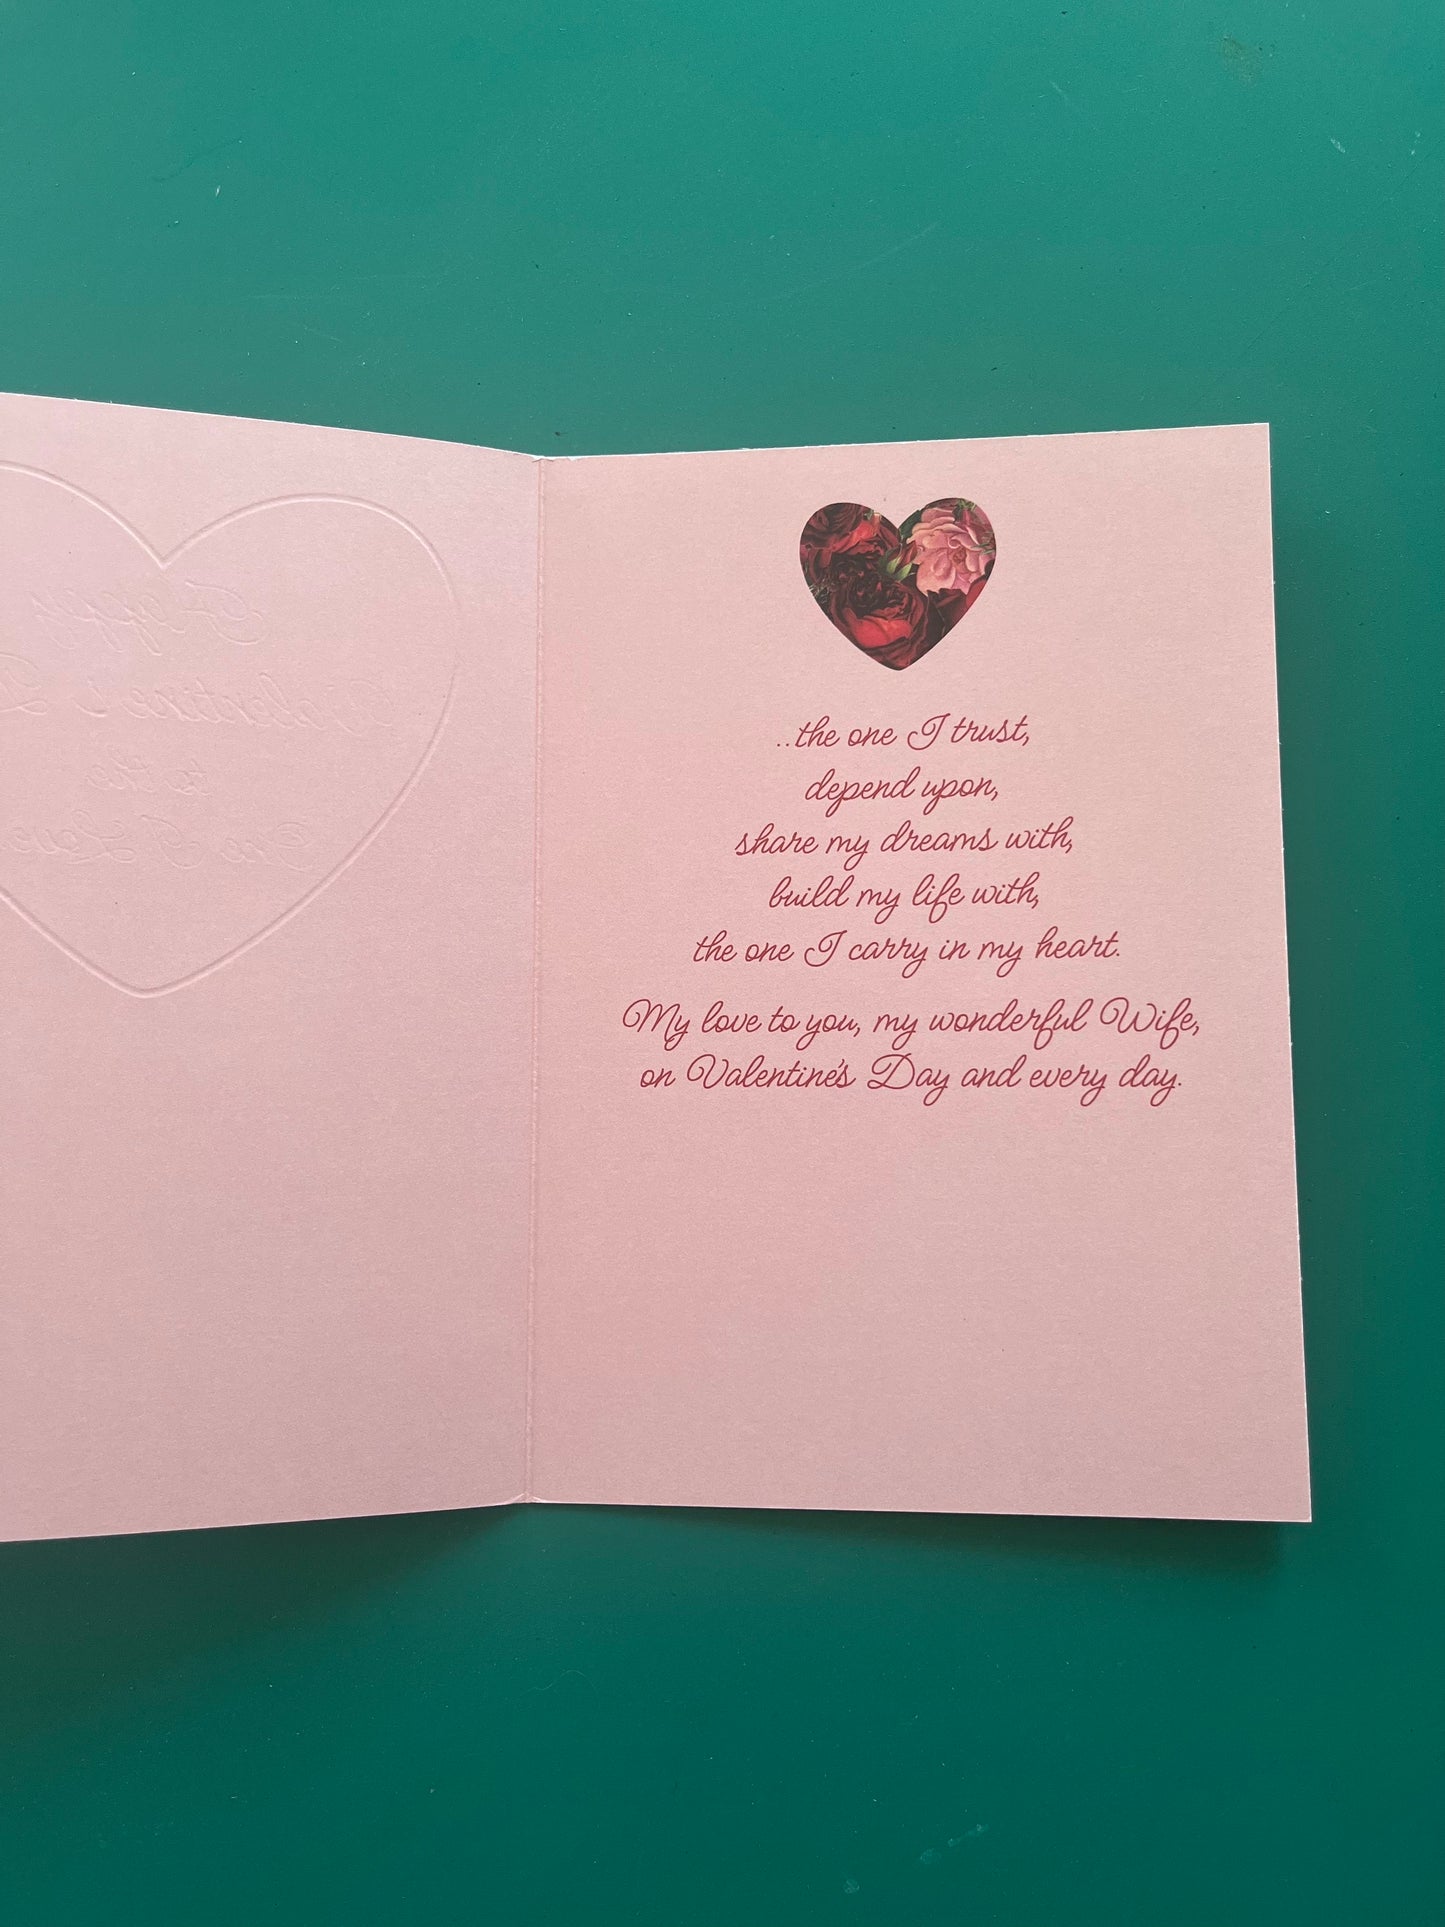 Romantic Roses Valentine's Greeting Card